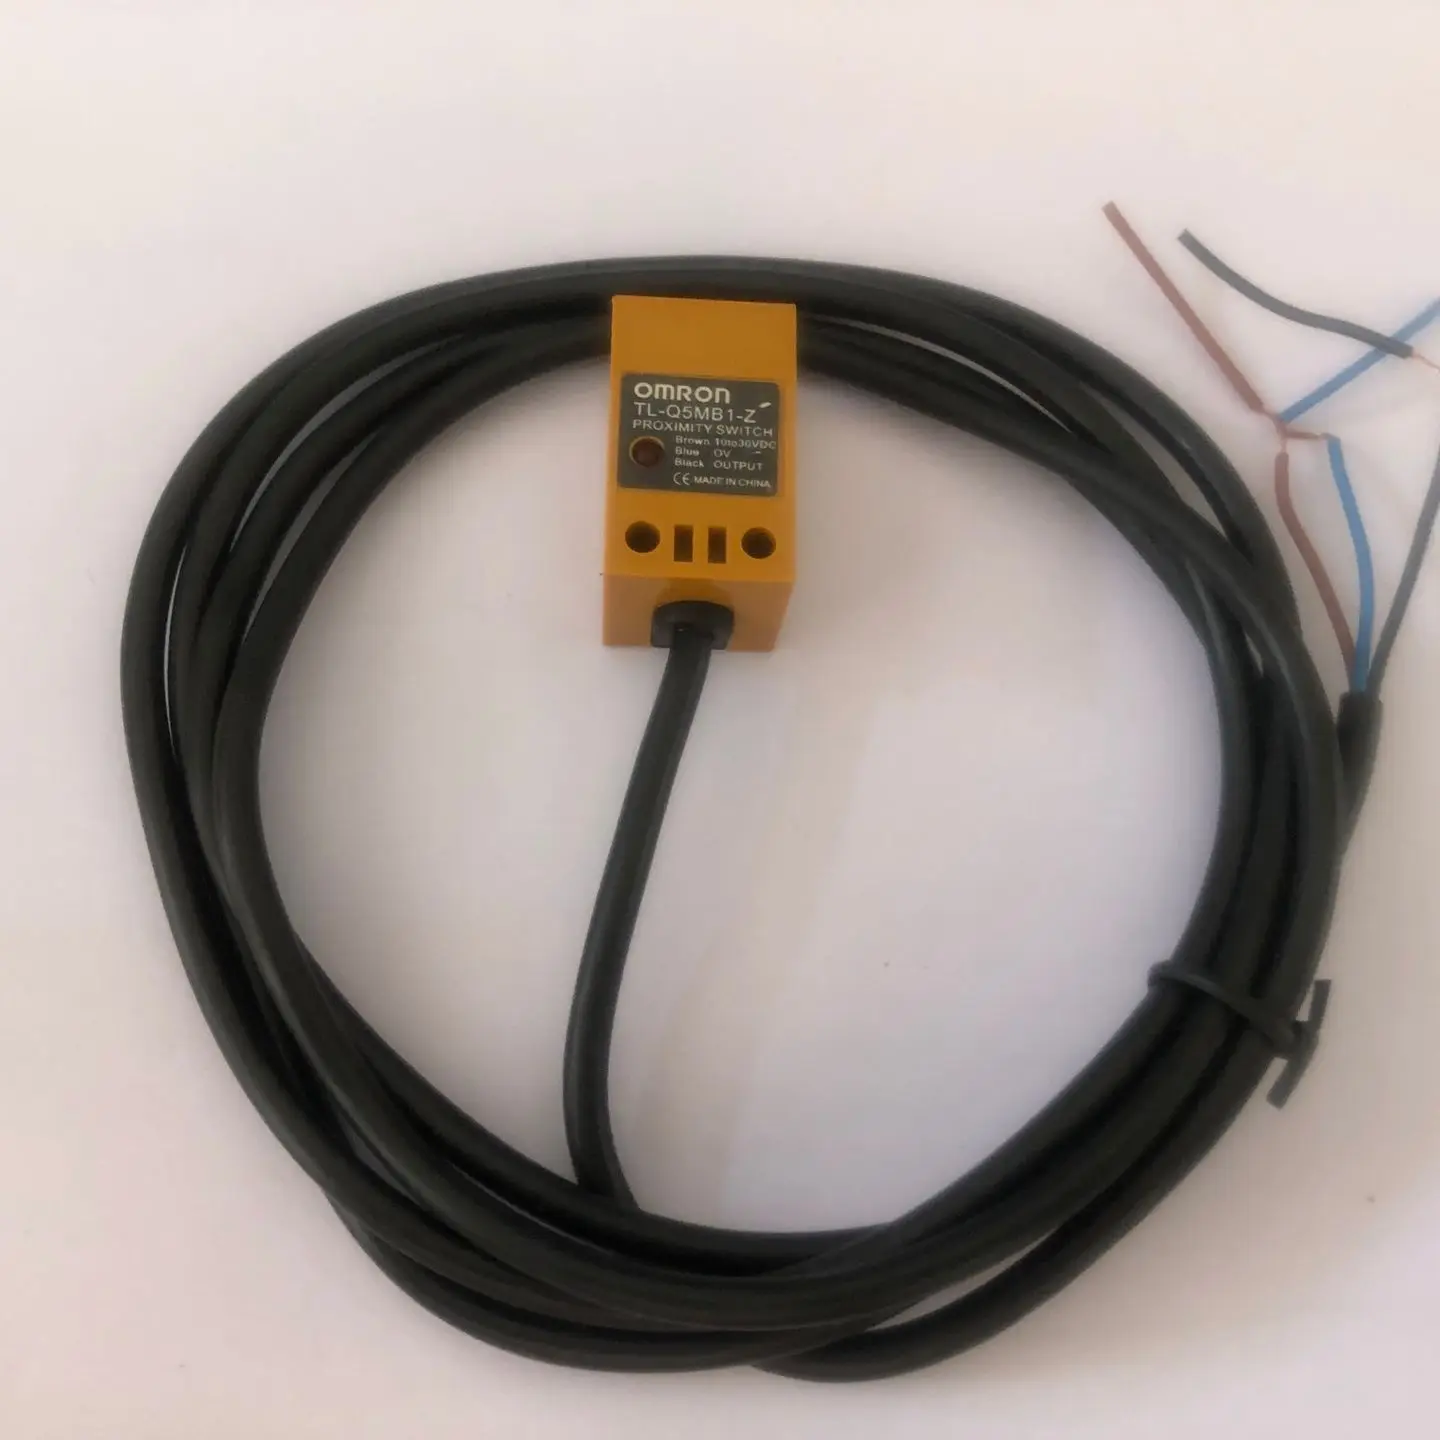 Inductive Proximity Sensor TL-Q5MB1 PNP 3WIRE NO DC10-36V Detection distance 5MM Proximity Switch sensor switch